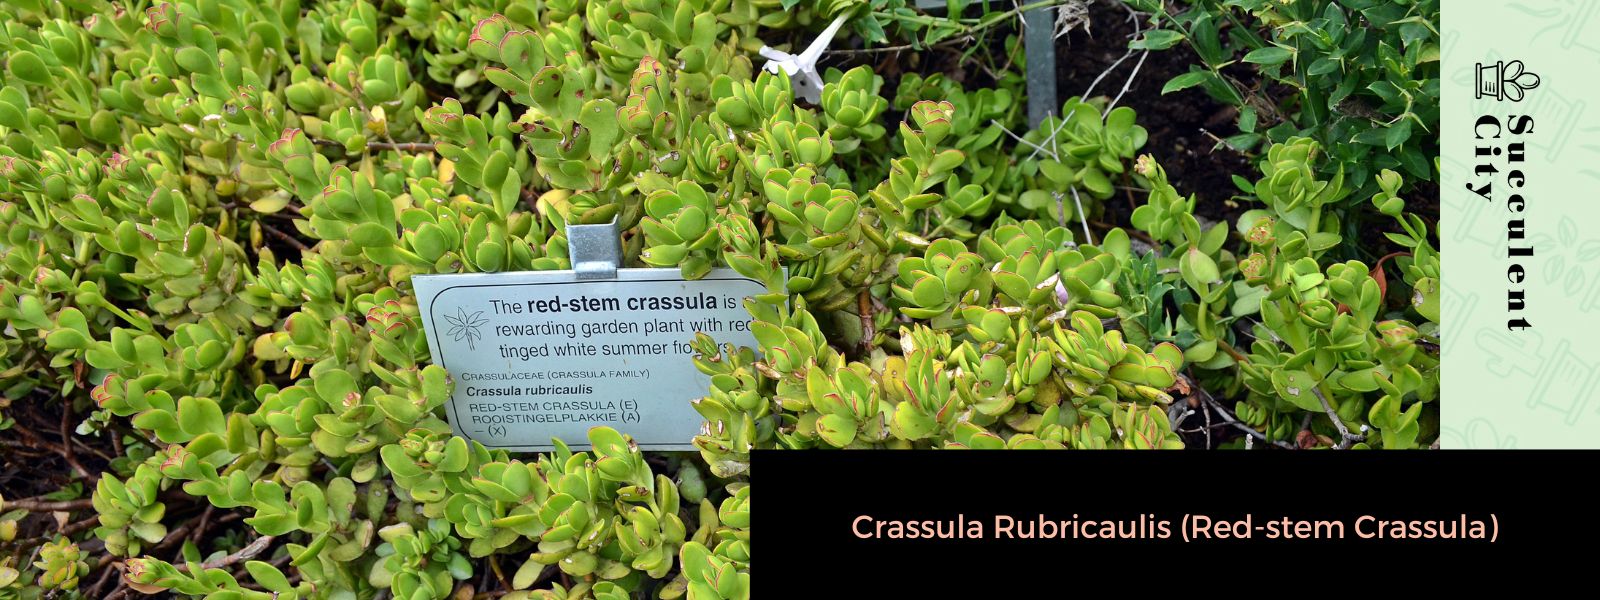 Crassula rubricaulis (Crassula de tallo rojo)